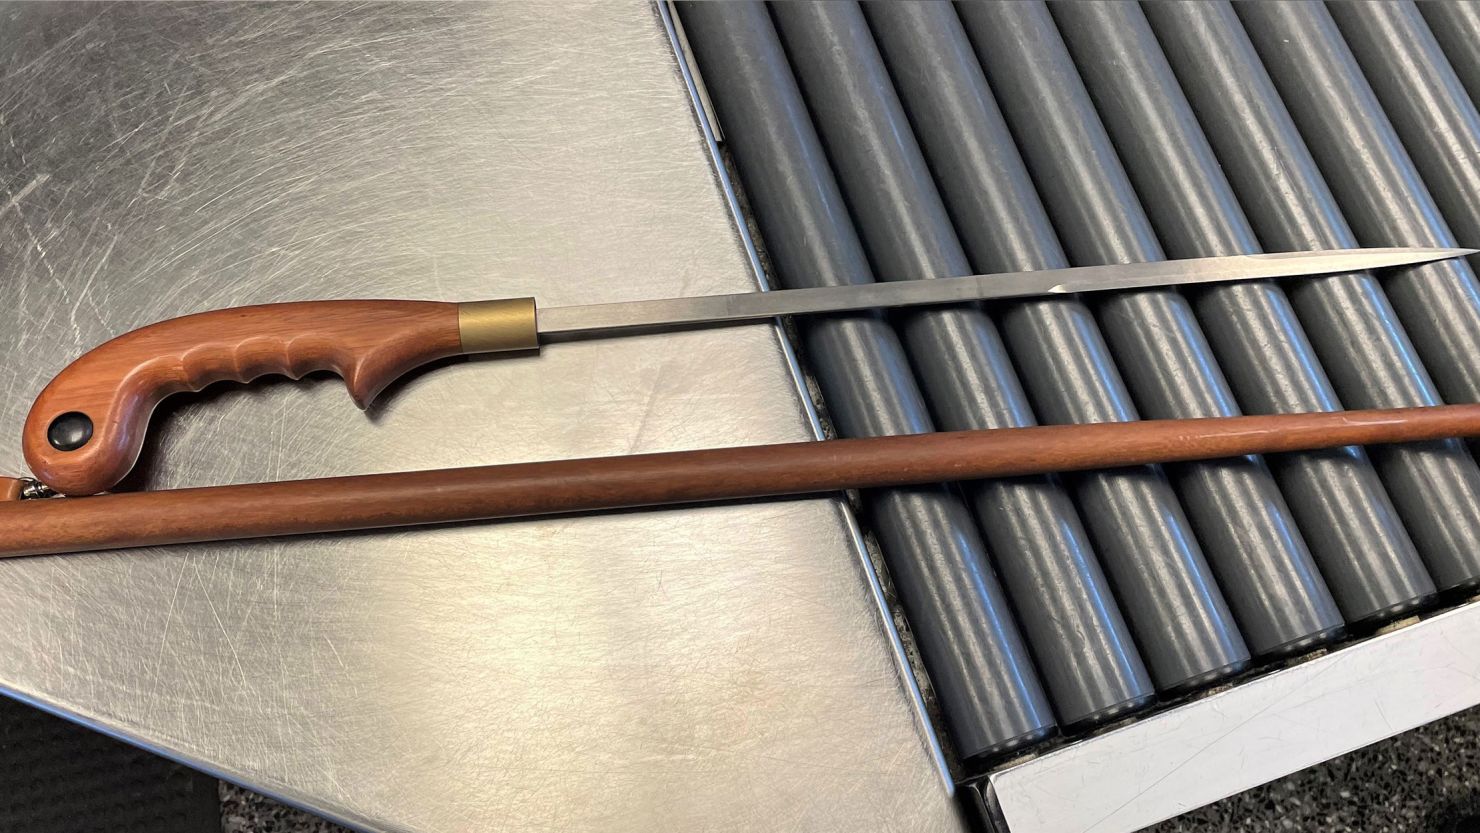 TSA officers at Boston's Logan International Airport discovered a long blade seemingly hidden inside a traveler's cane. 